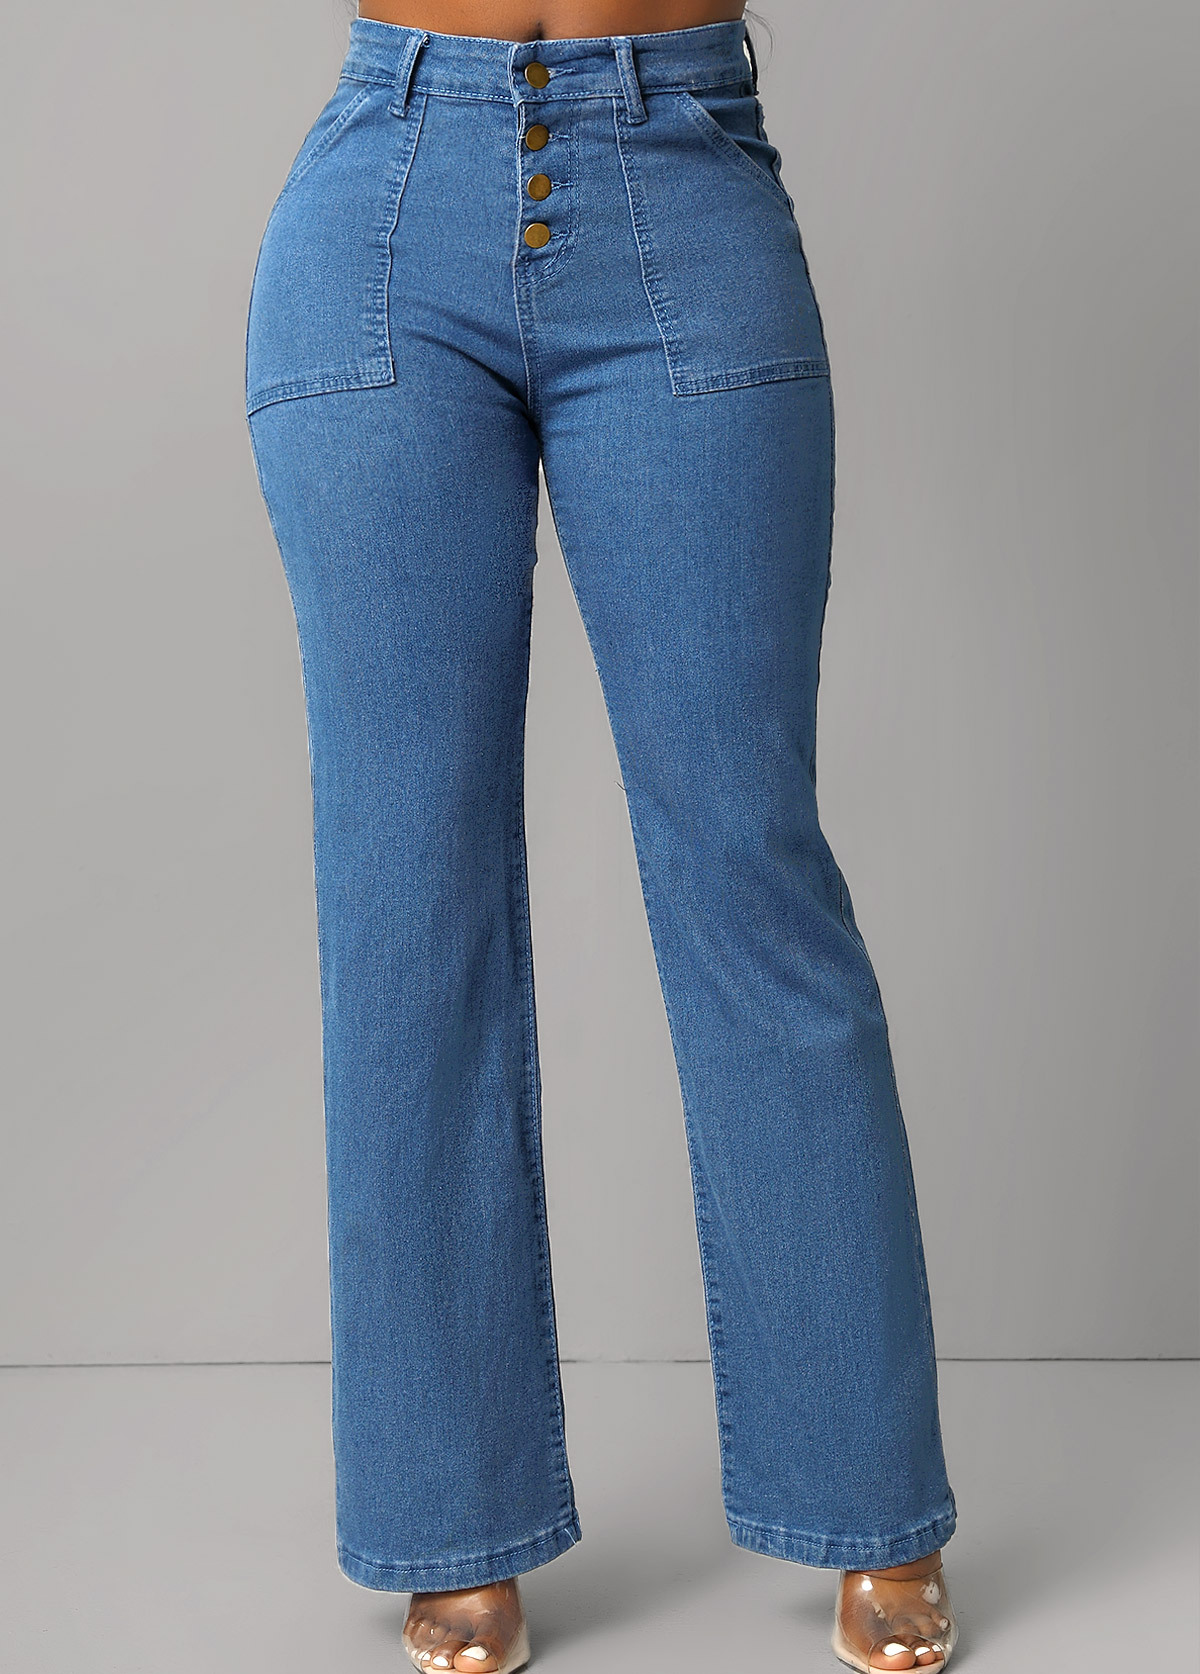 Pocket Button Fly Denim Blue Jeans - camarand